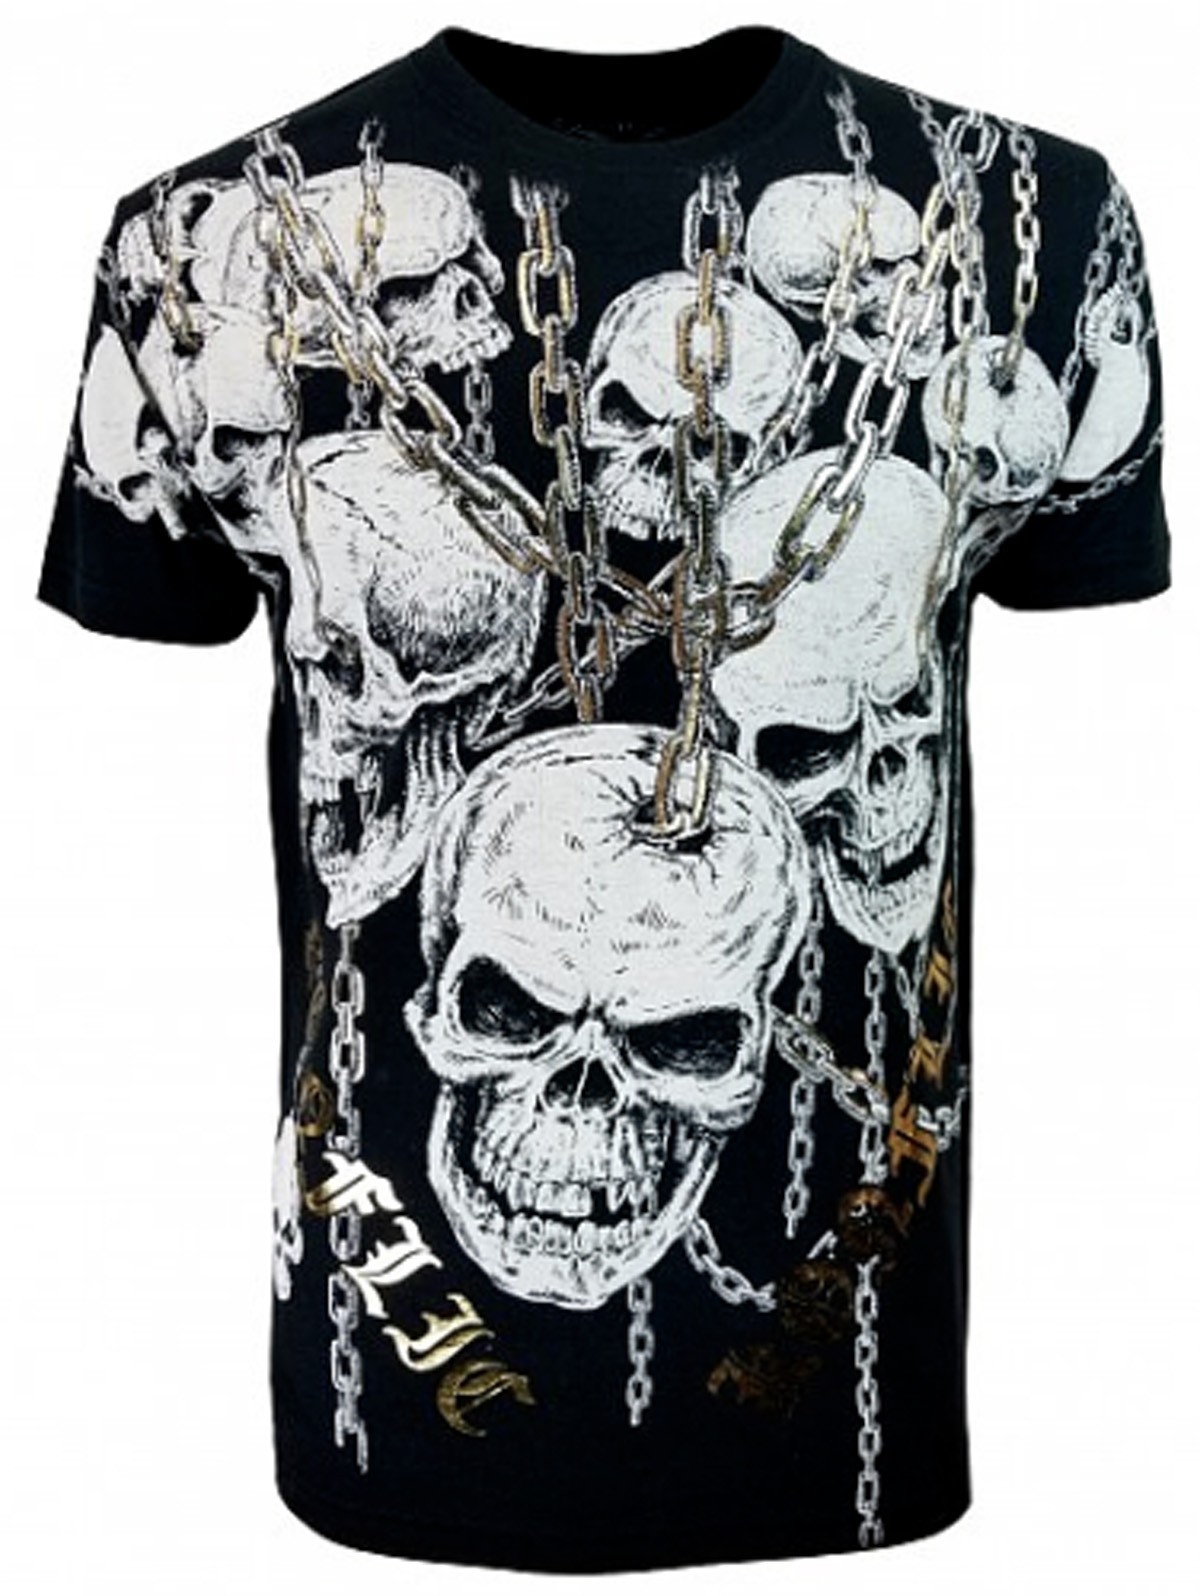 Konflic Clothing - Skull Chains T-Shirt